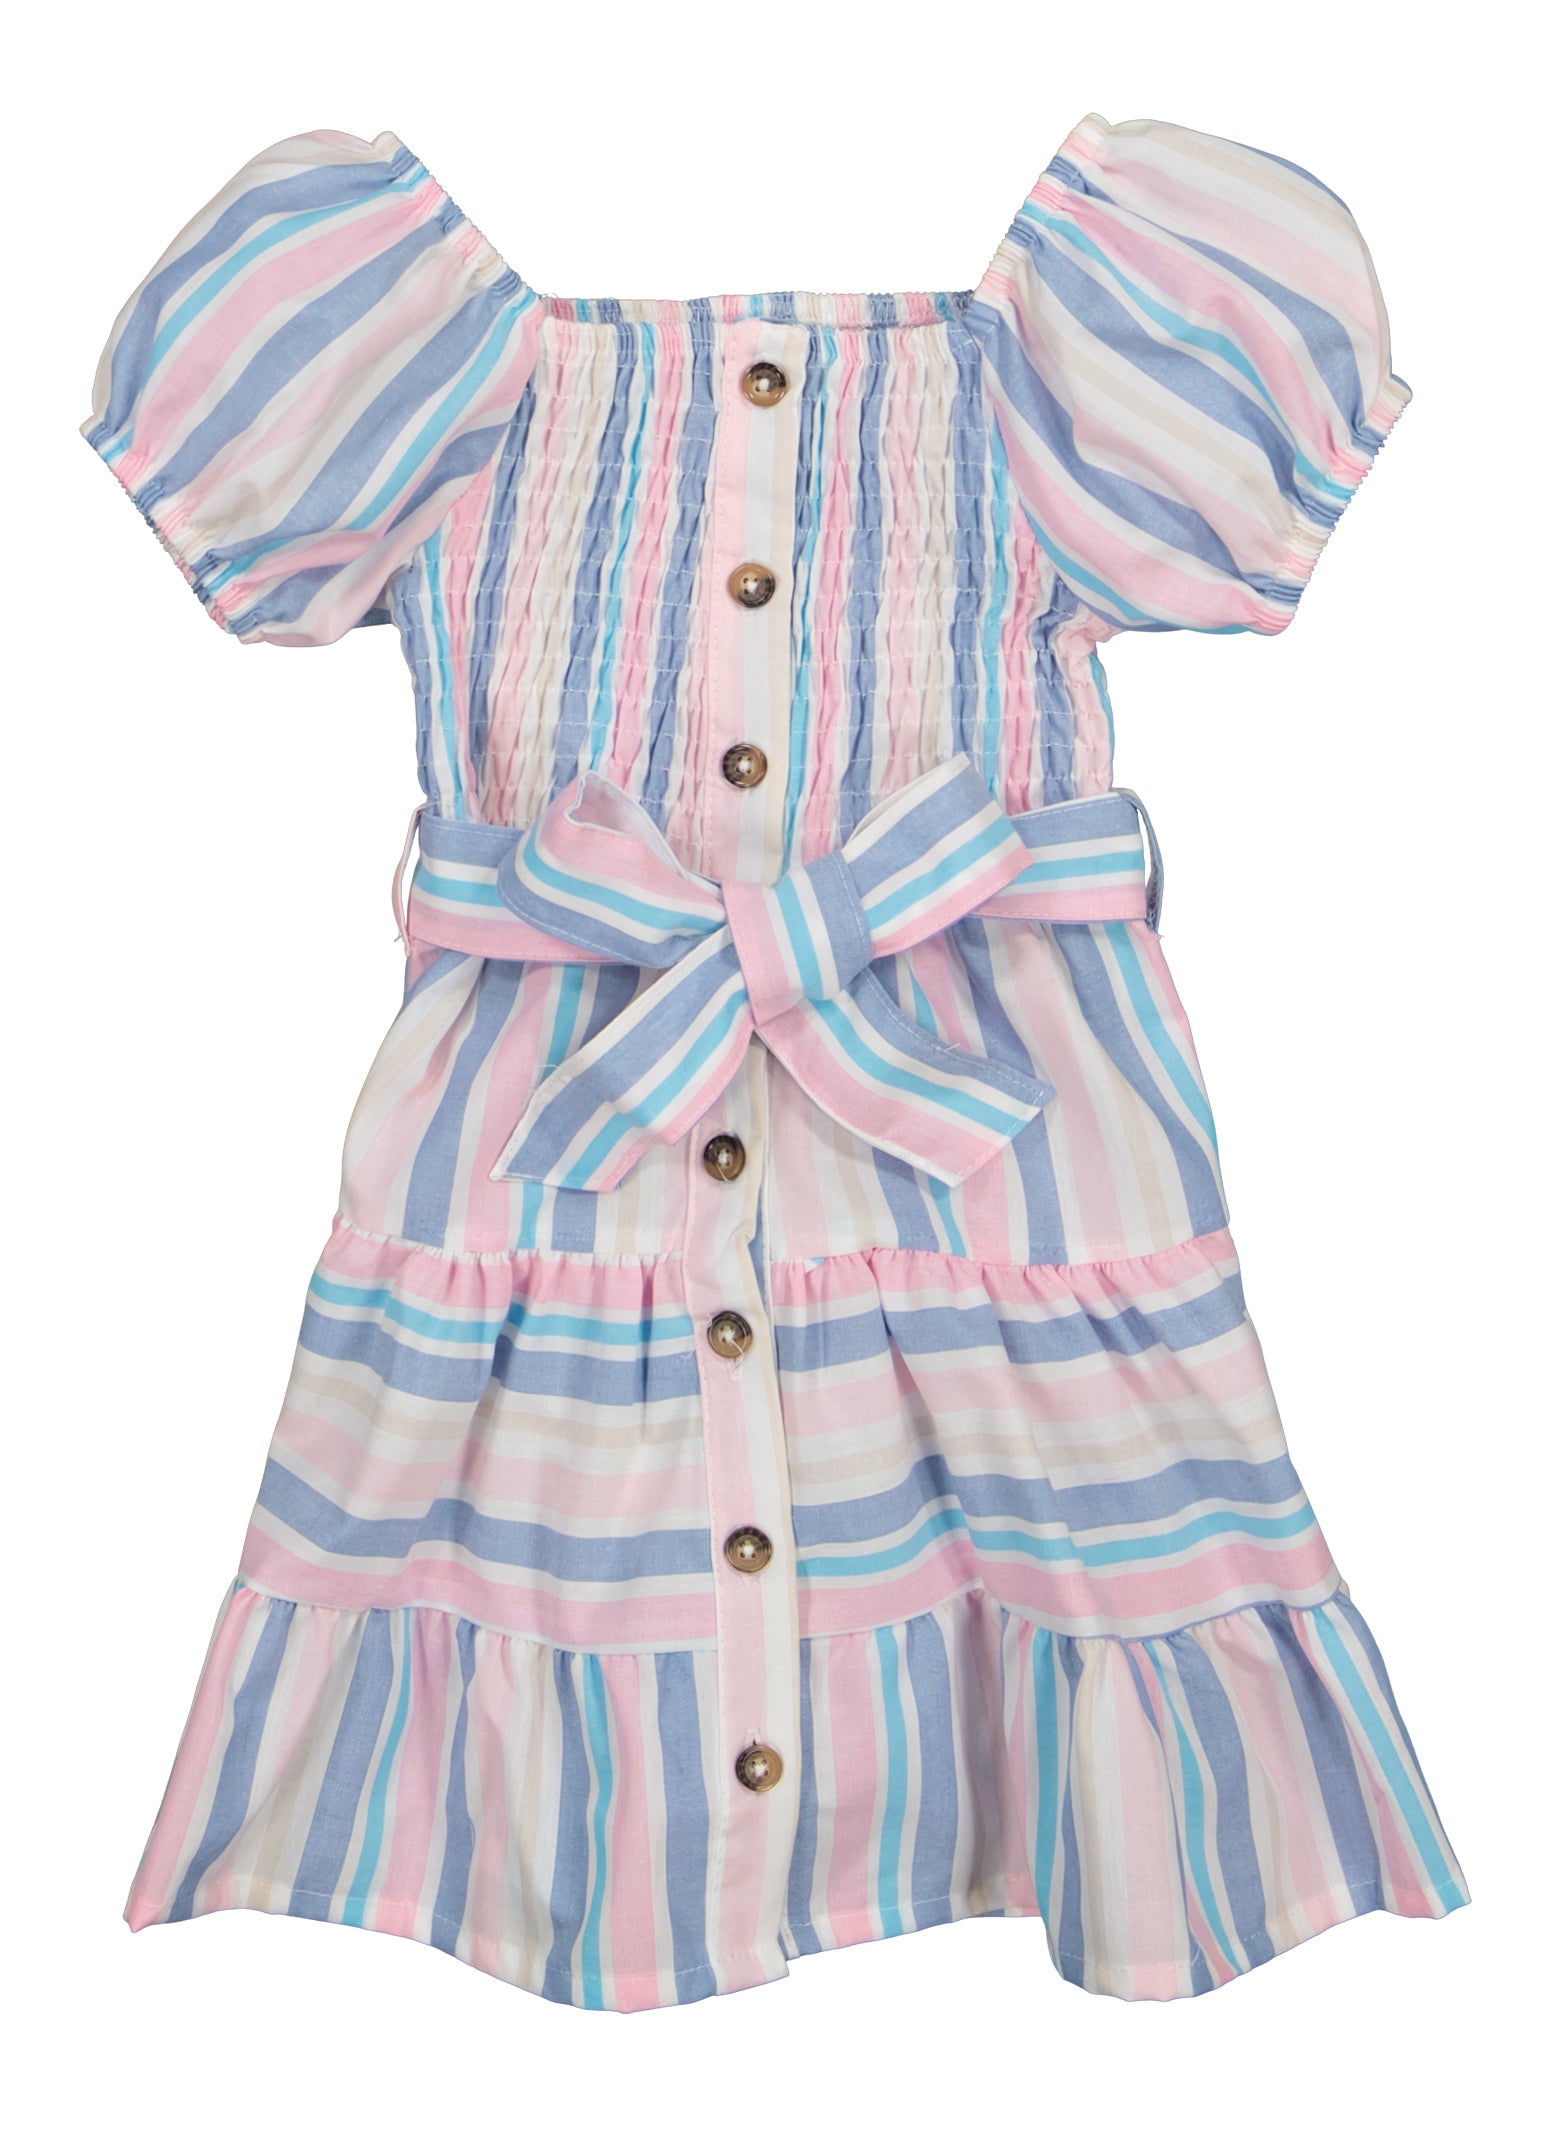 Toddler Girls Puff Sleeve Smocked Tie Waist Dress, Multi, Size 2T